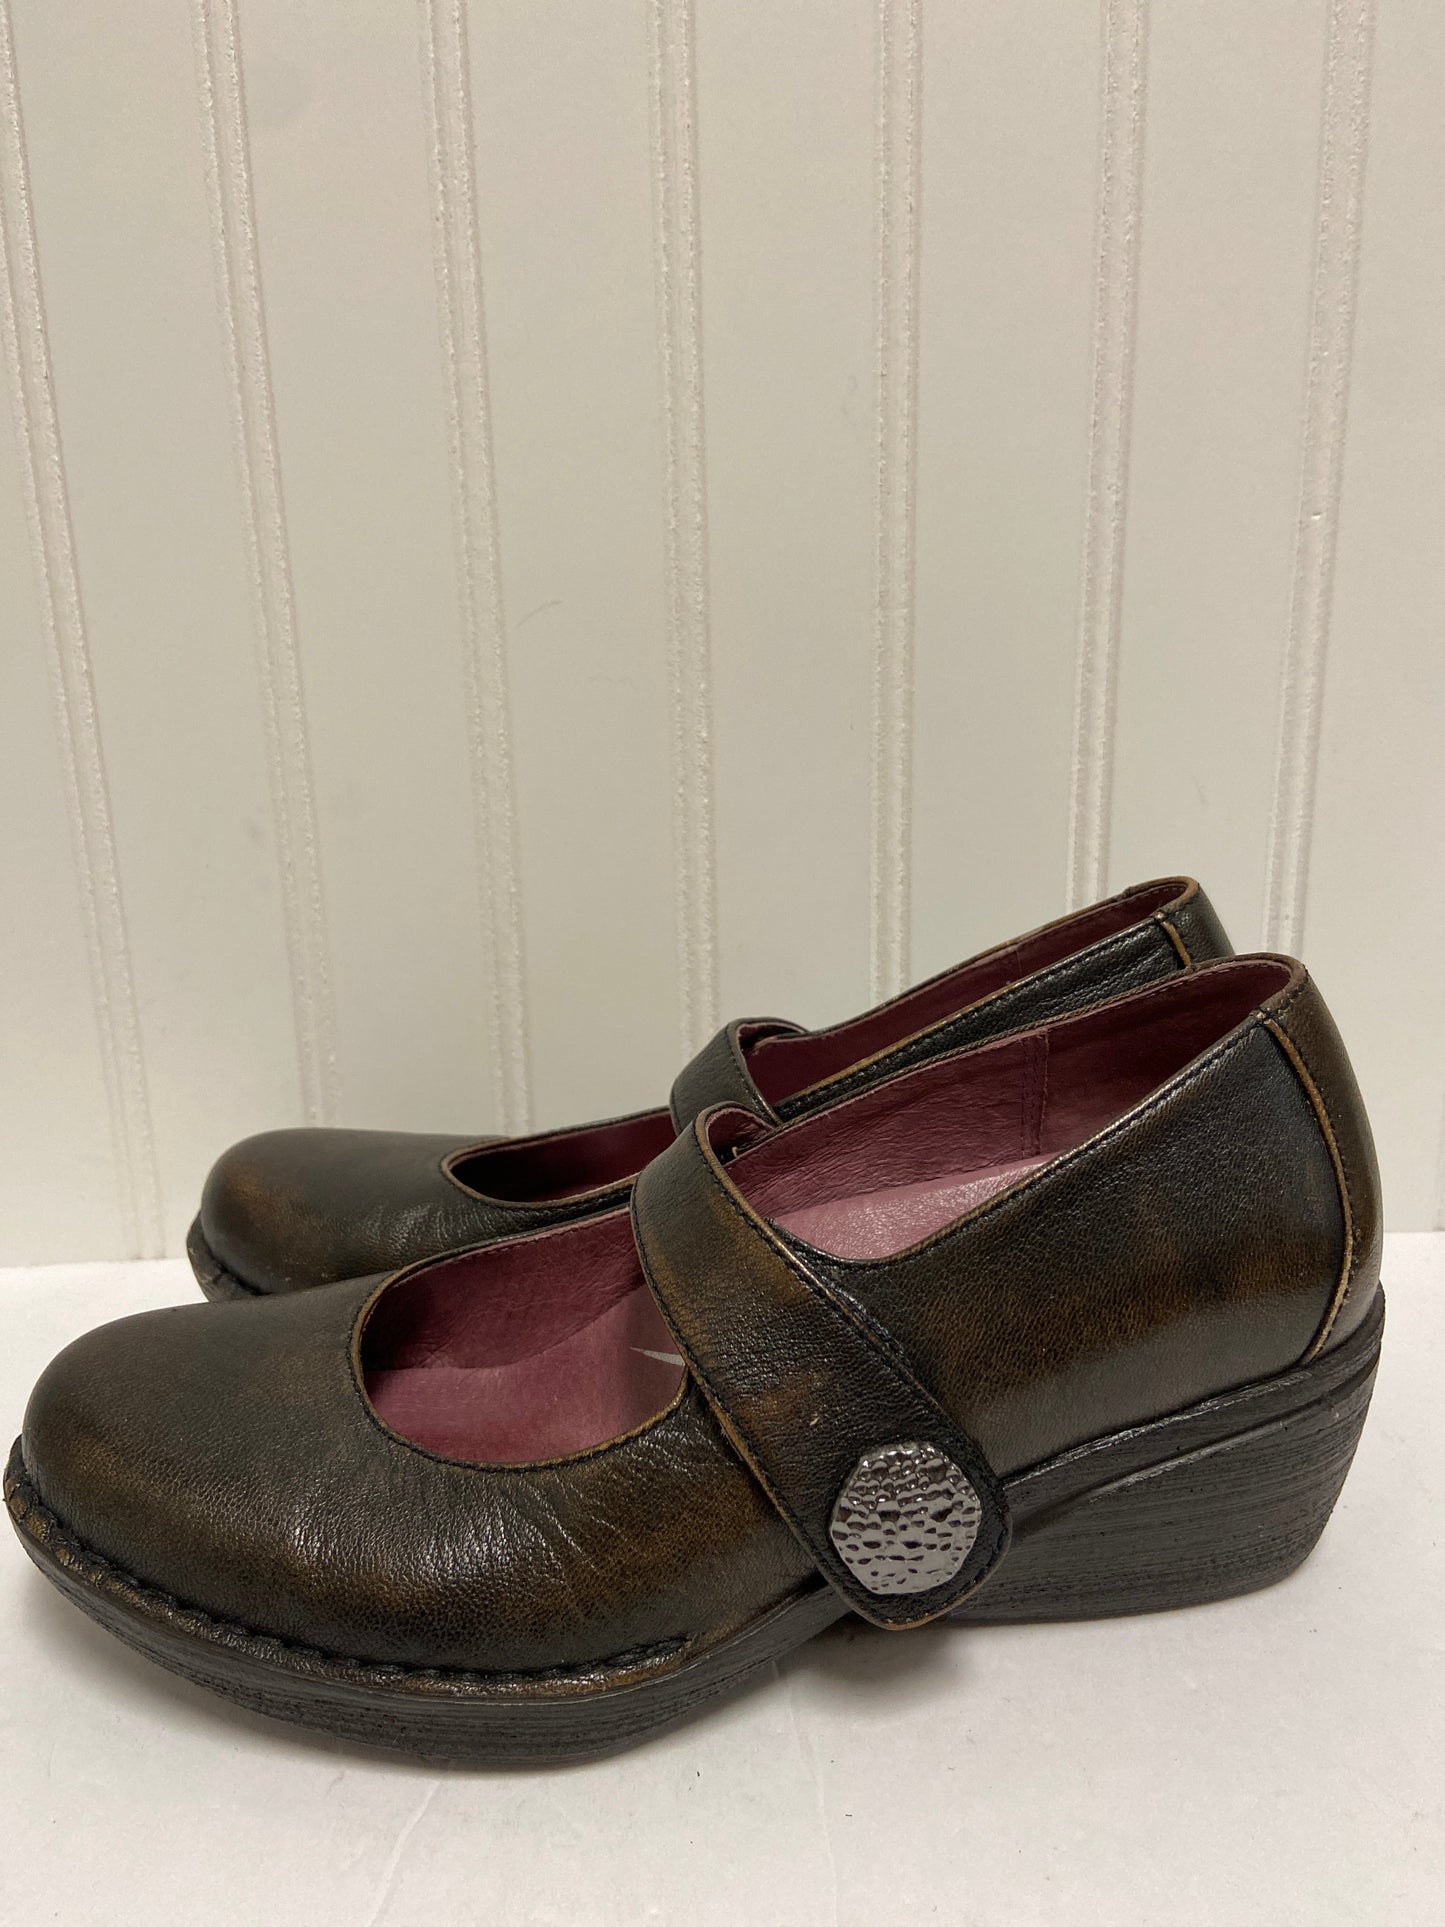 Shoes Heels Wedge By Dansko  Size: 6.5